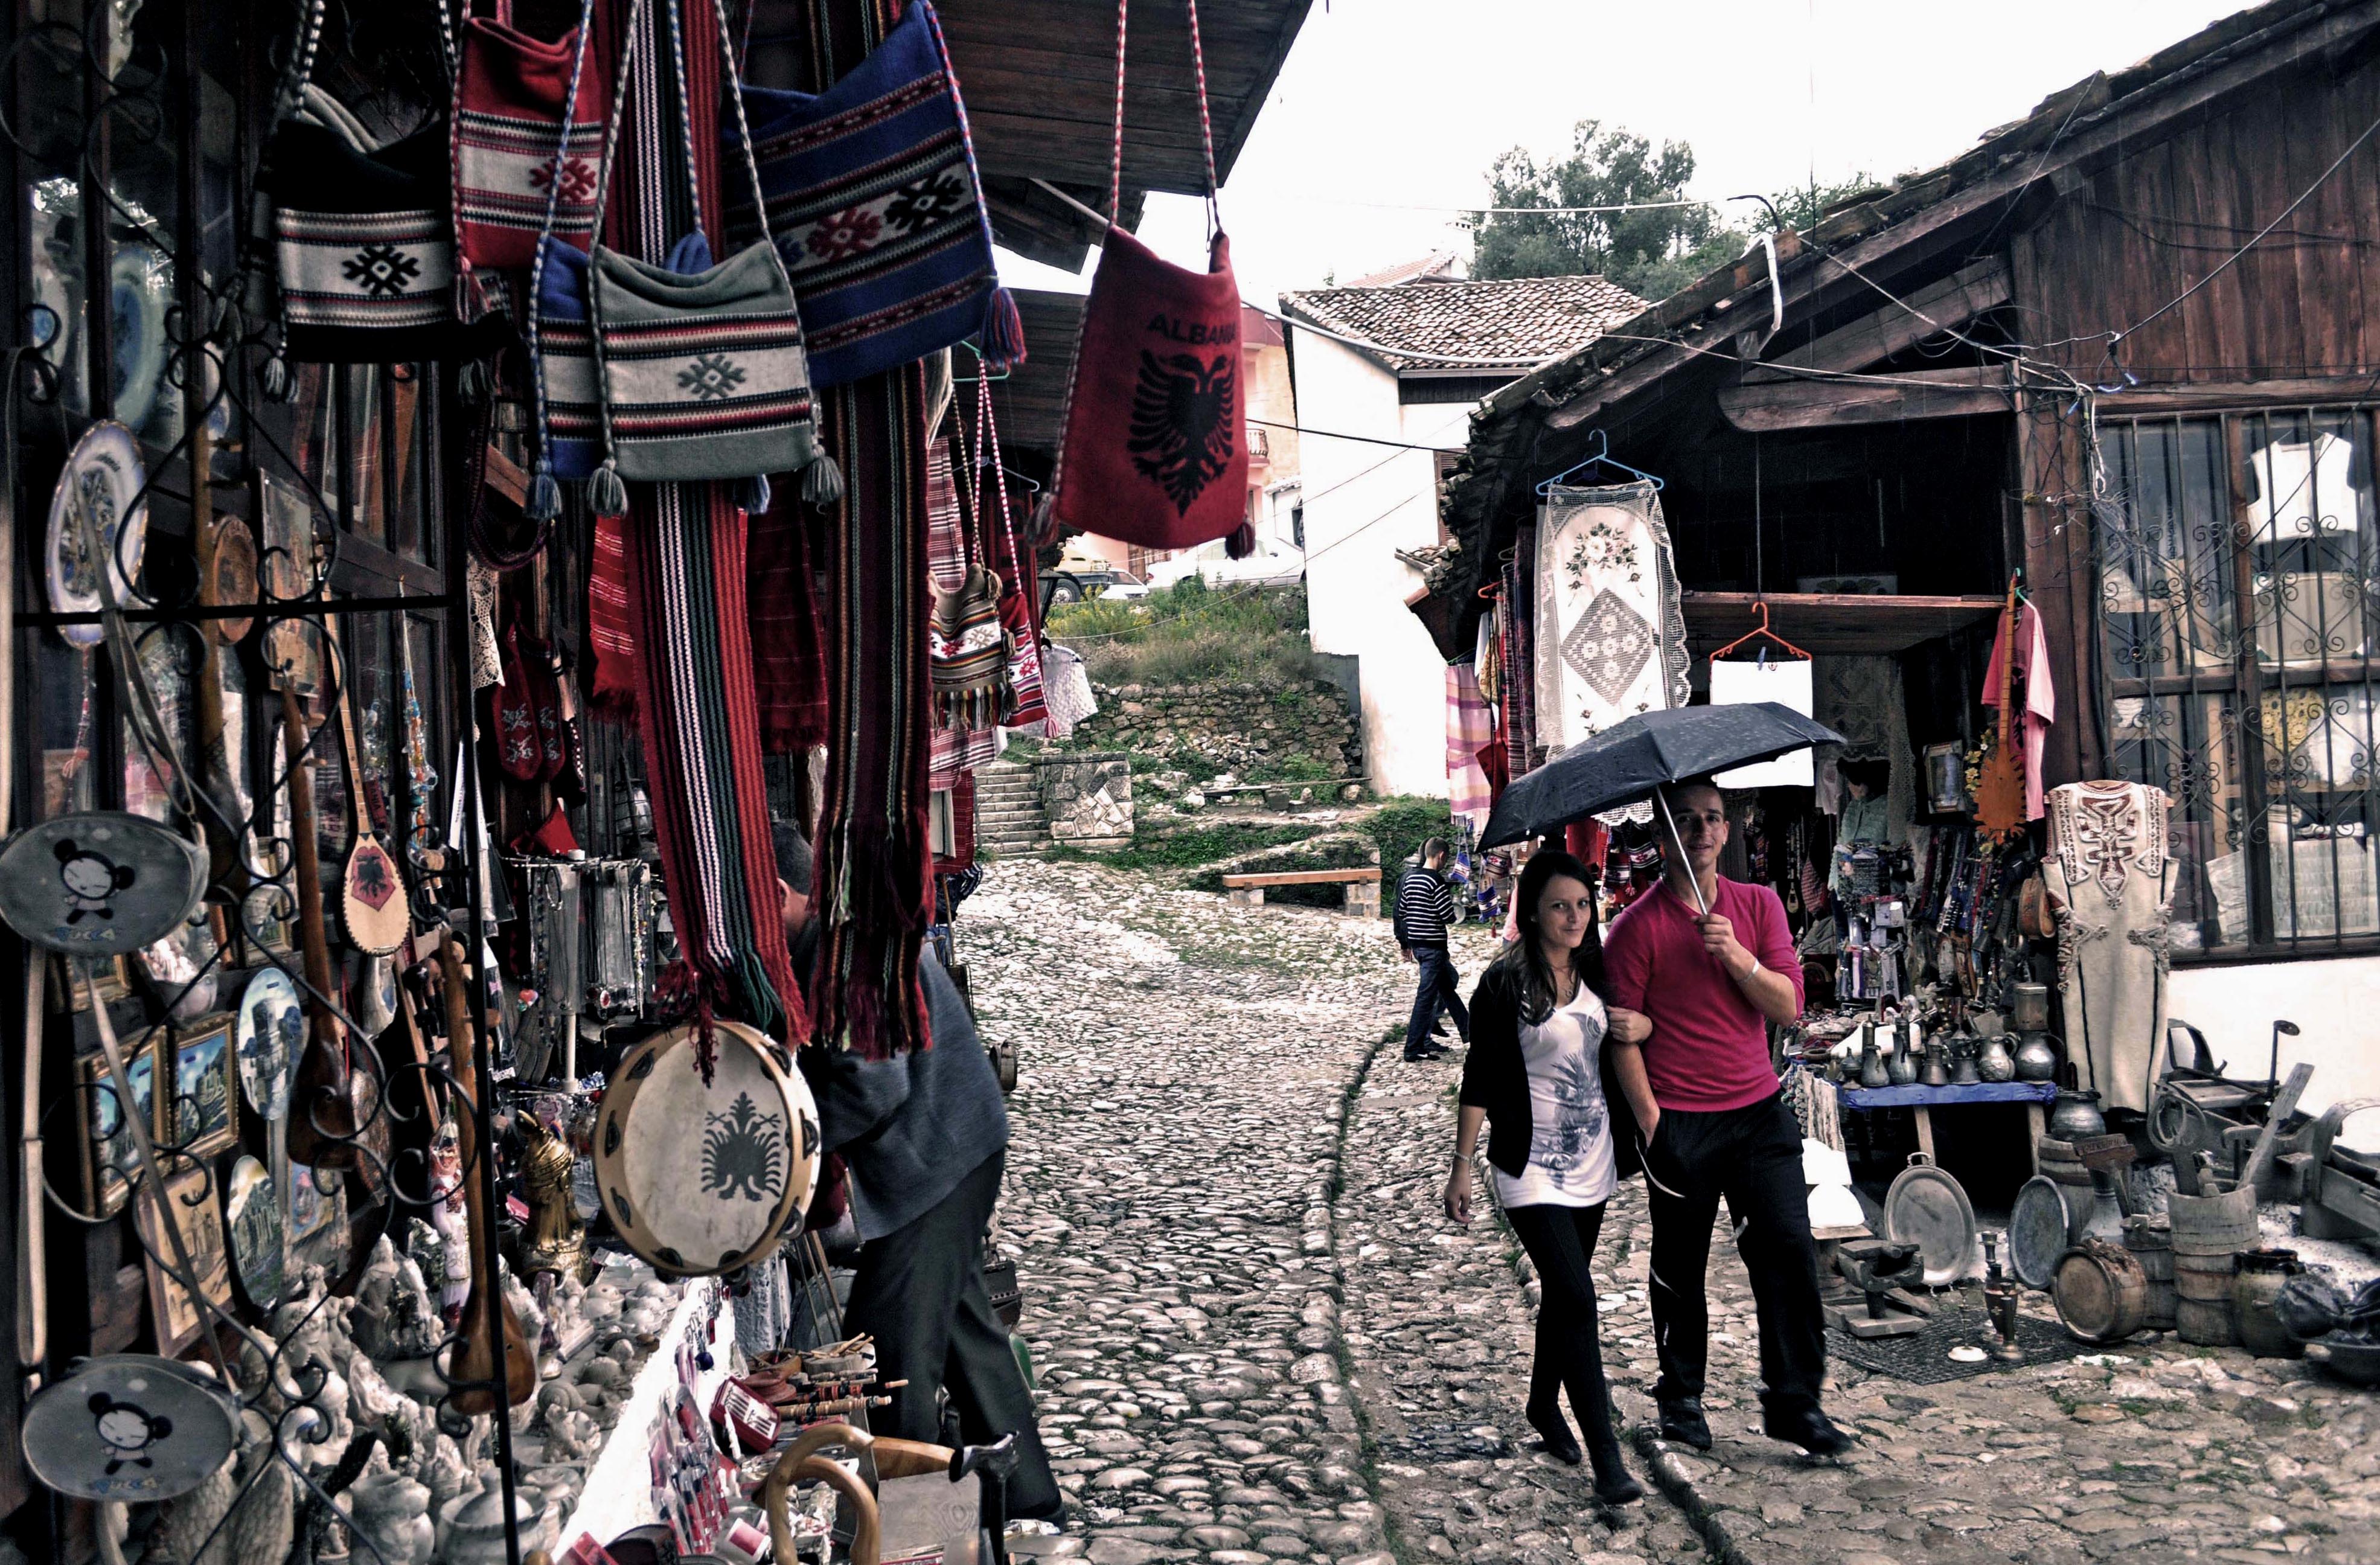 The Kruja bazaar - photo by Marjola Rukaj